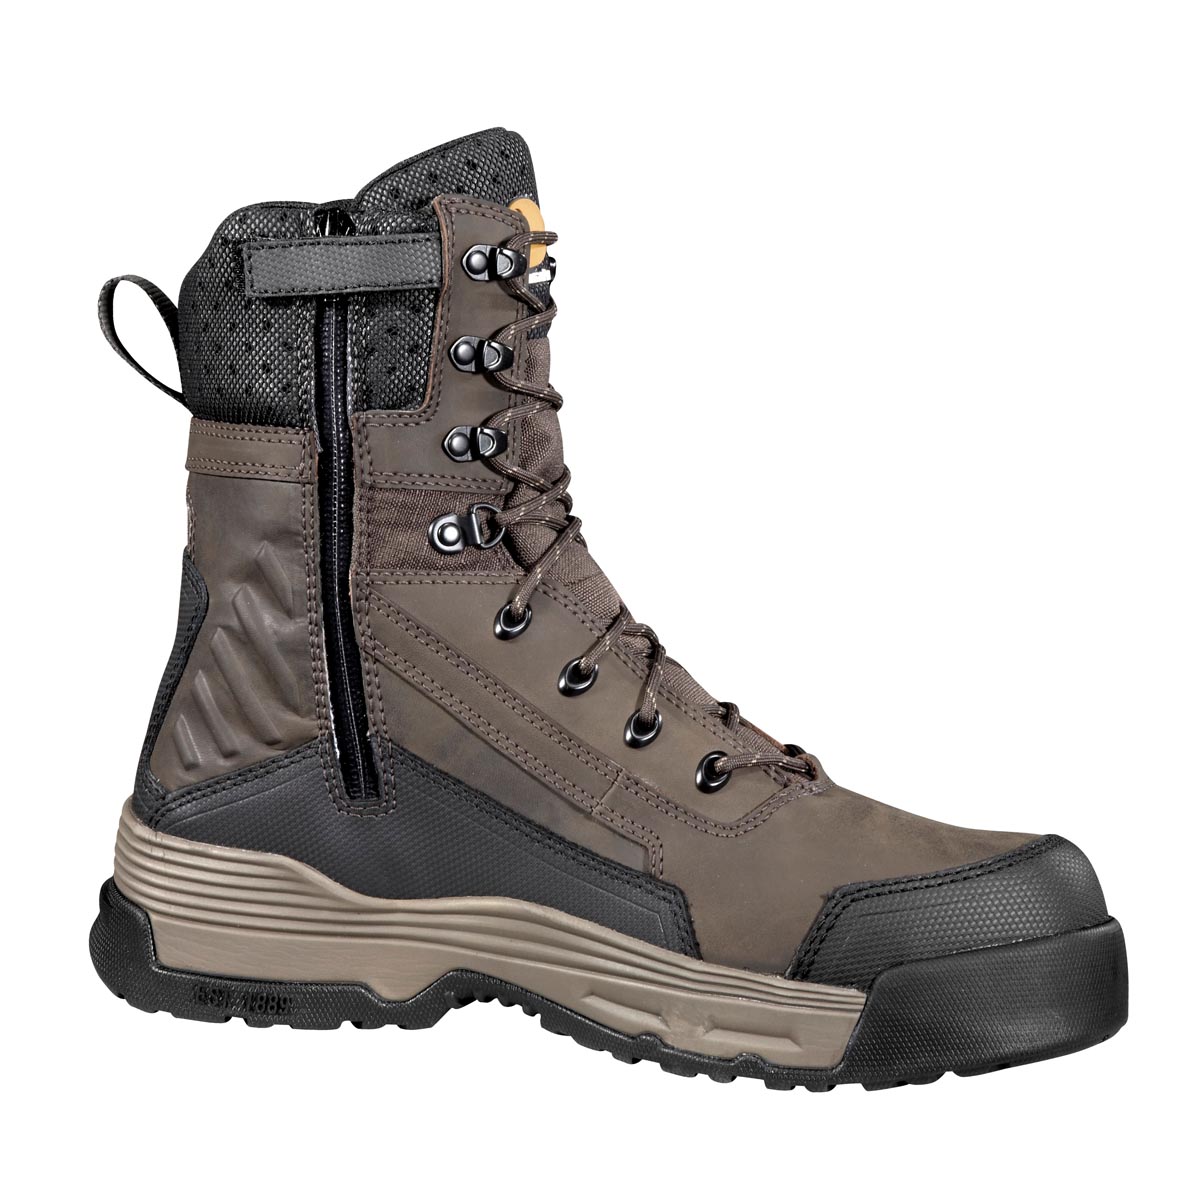 Carhartt Men's 8 Inch Waterproof Insulated Work Boot with Medial Side Zip Composite Toe